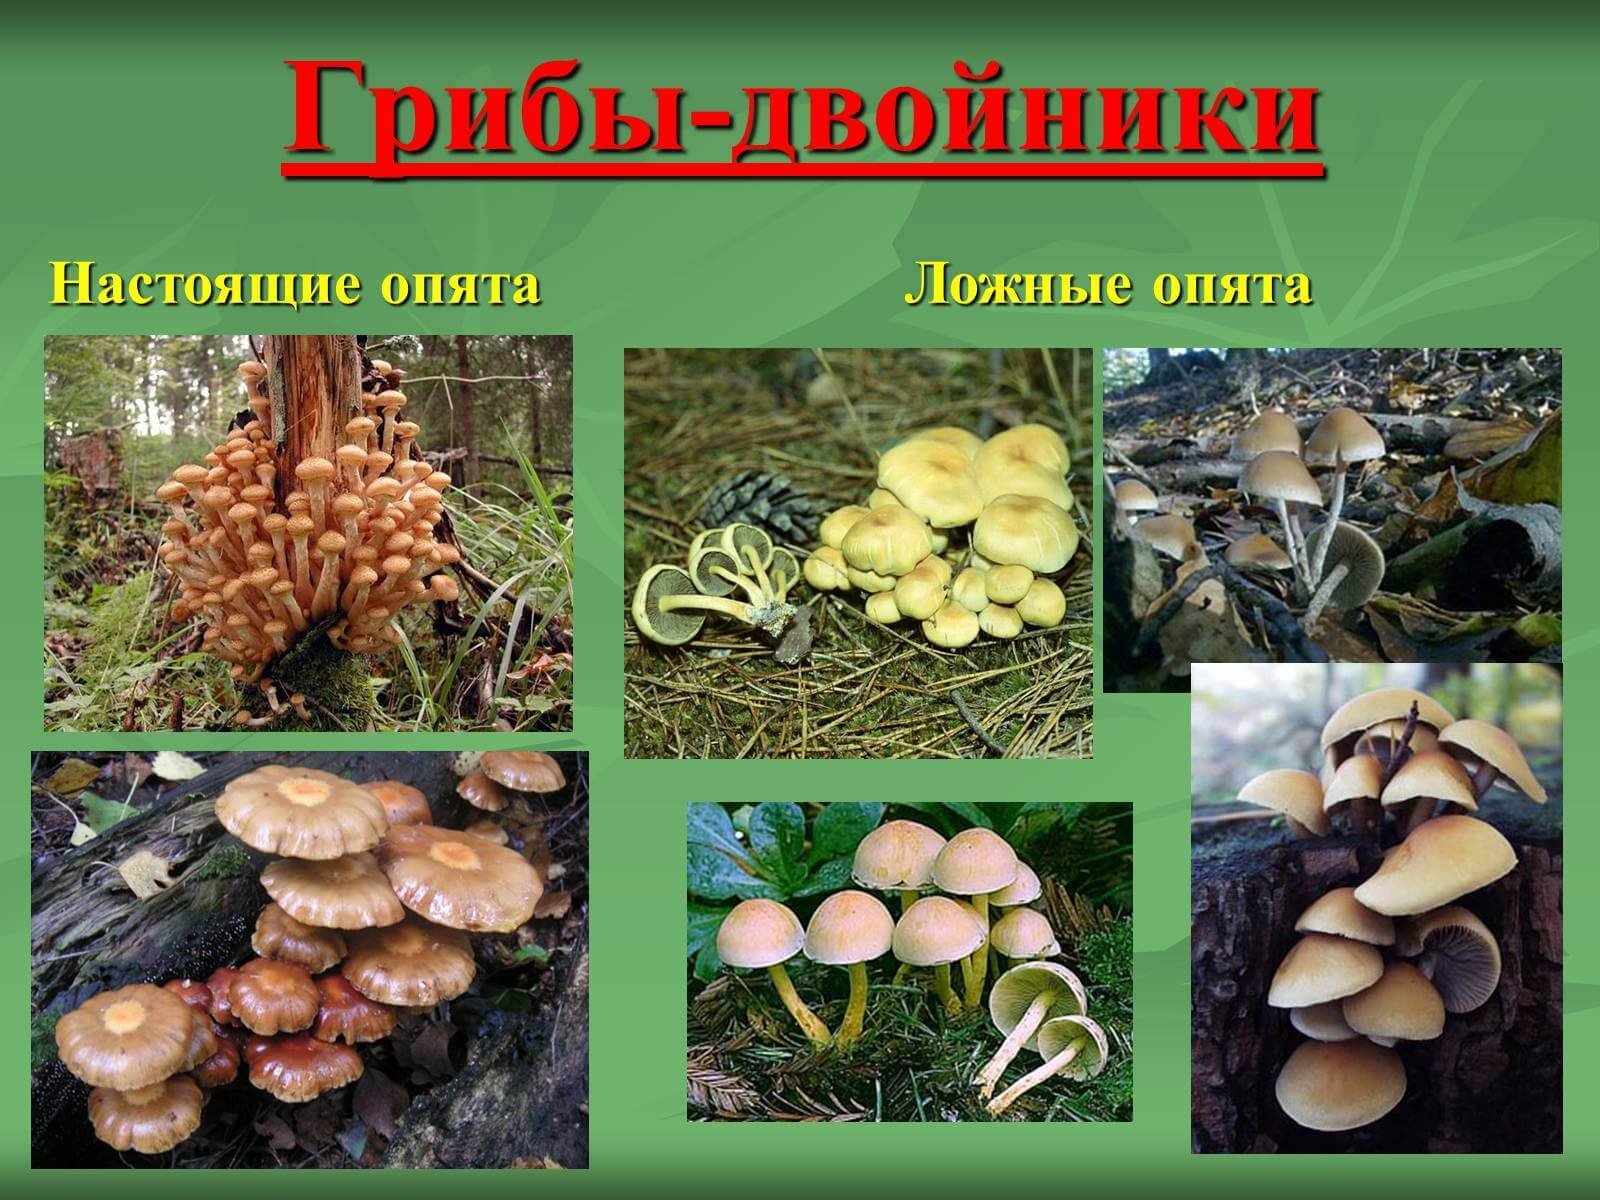 Ядовитые грибы опята - 67 фото